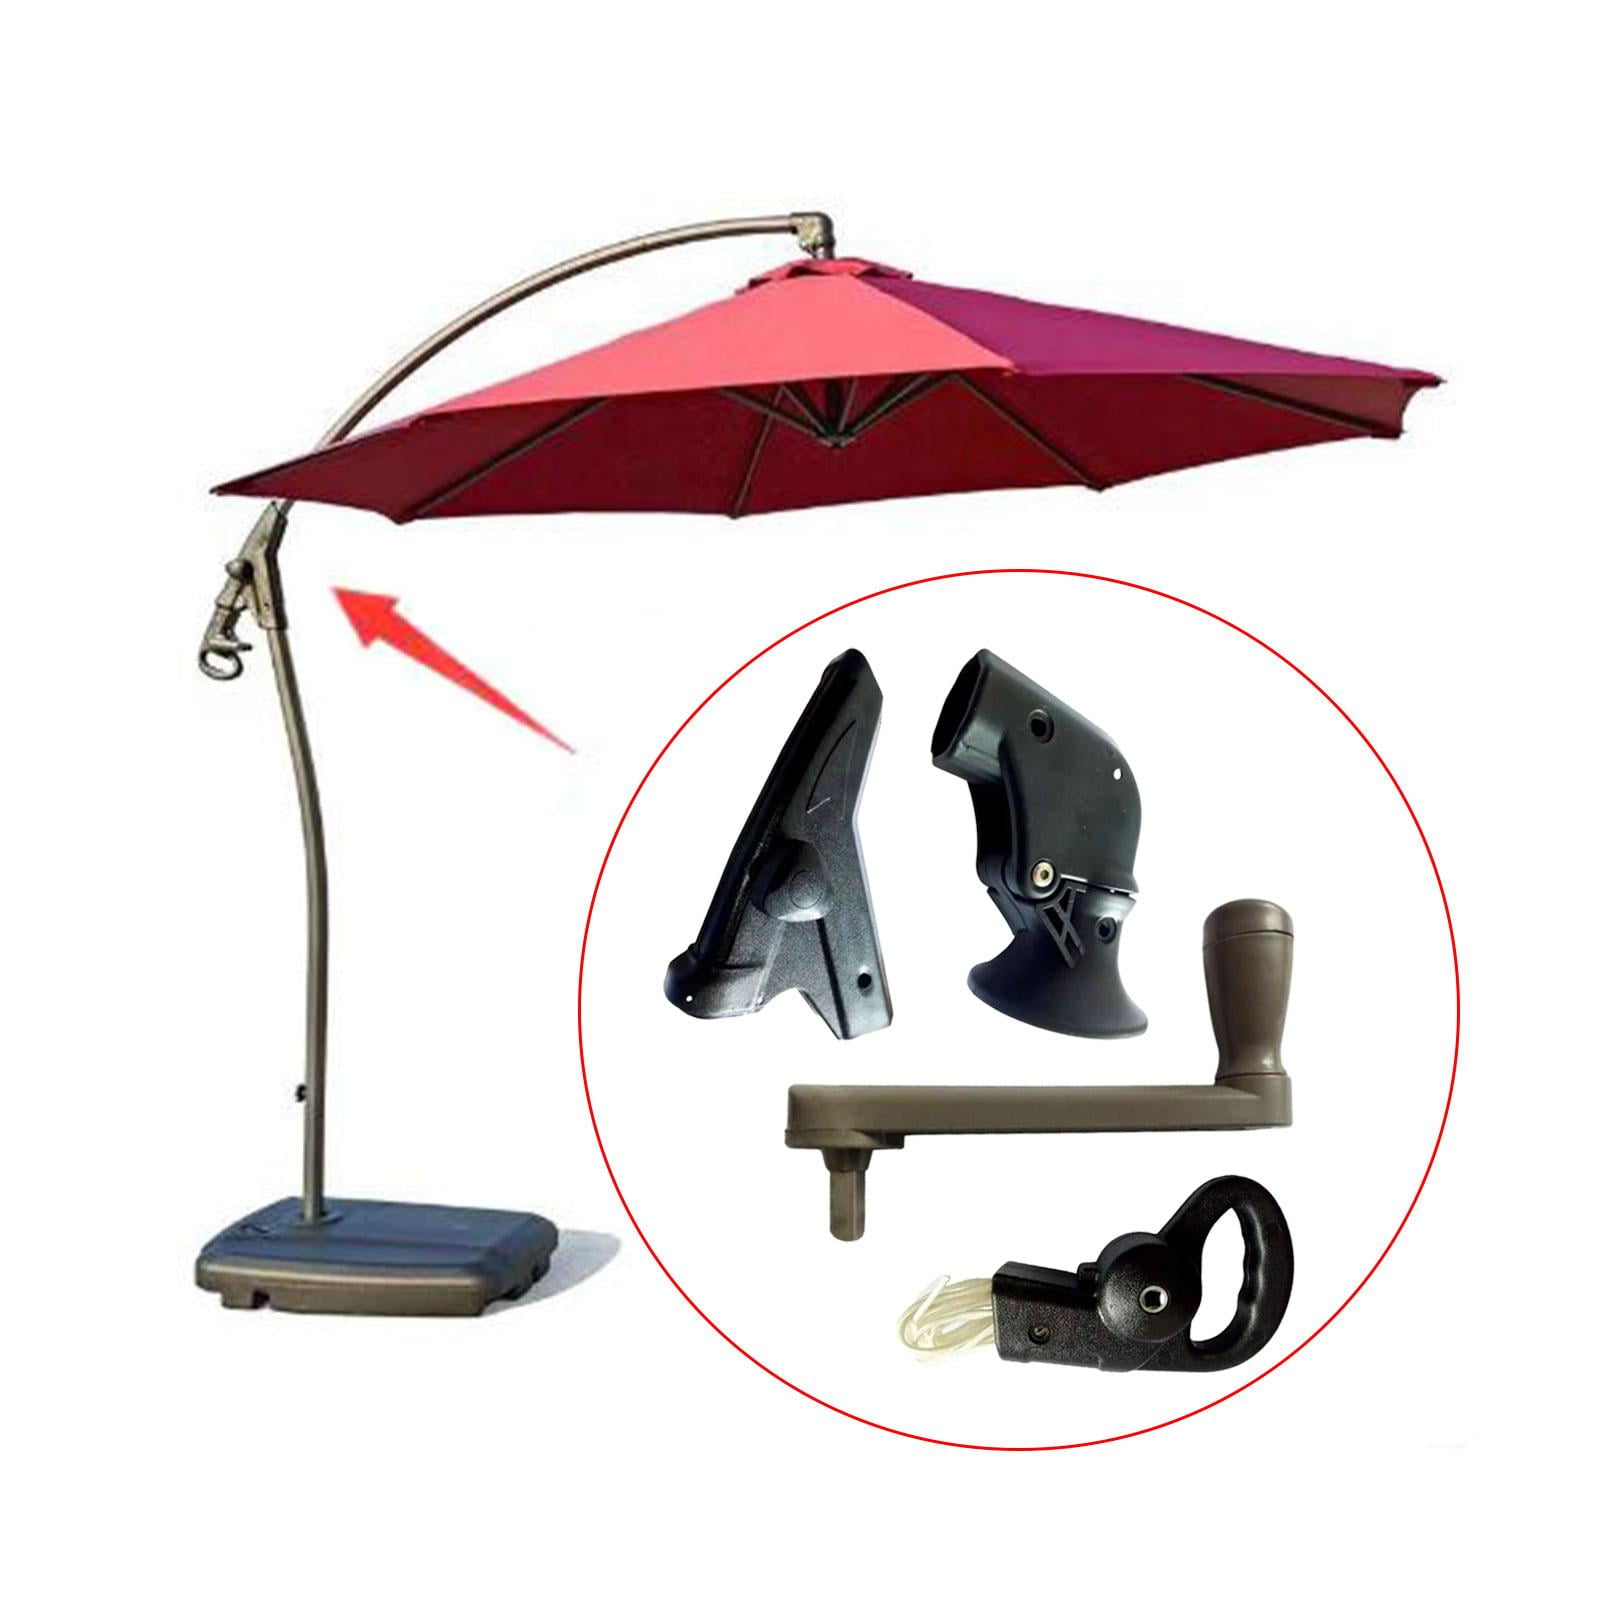 Patio Umbrella Accessory Outdoor Umbrella Accessories, Lightweight Portable Replacement  Parts for Camping Picnic Courtyard Garden Patio with Rocker Handle 